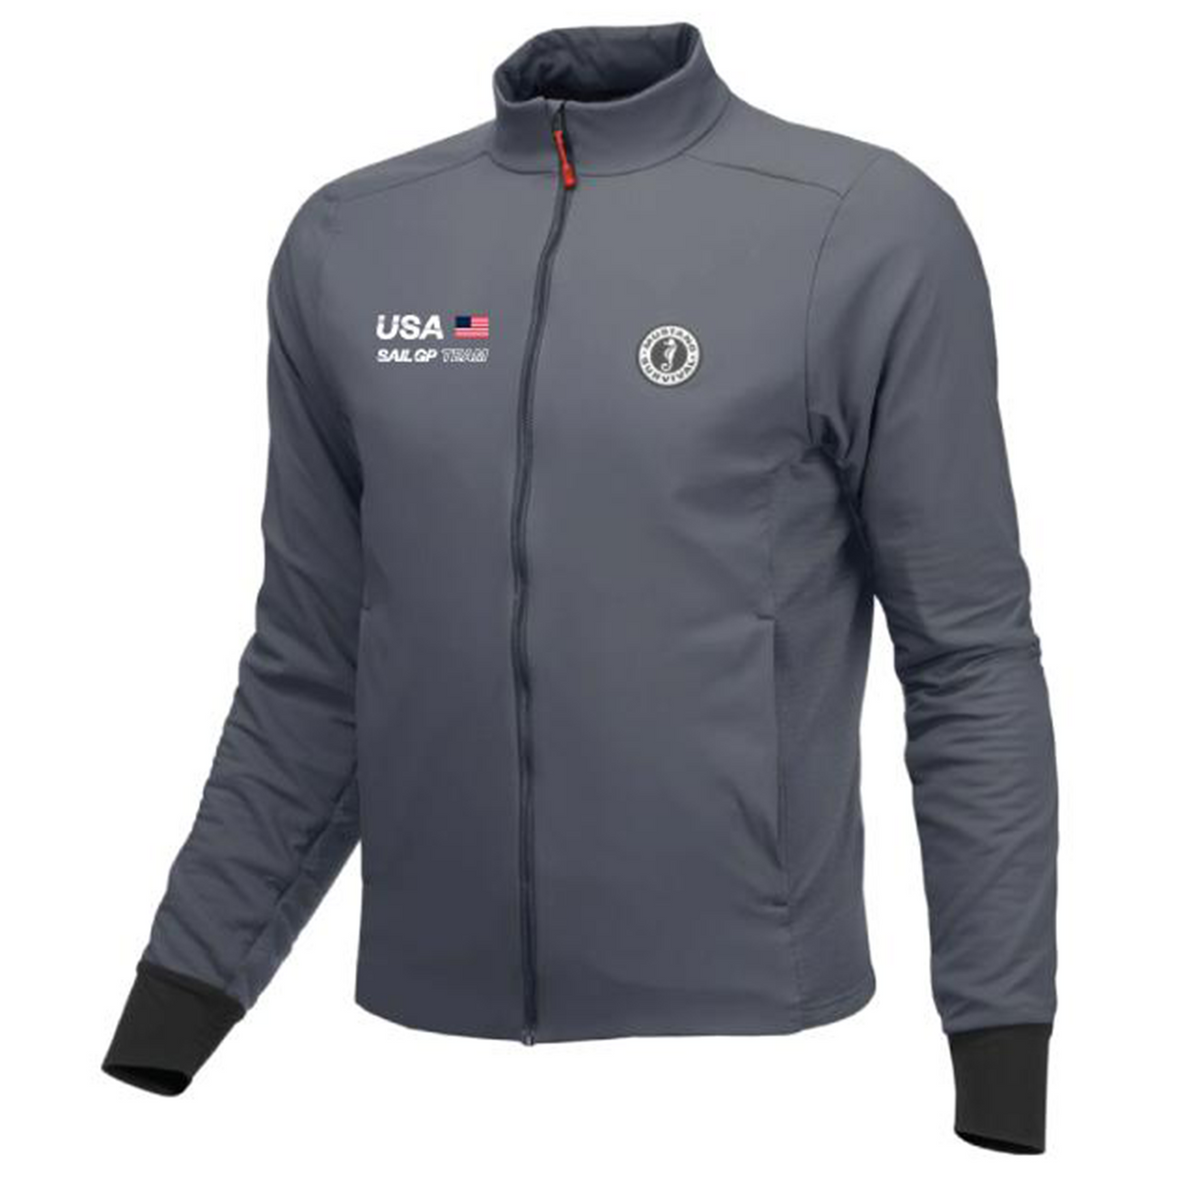 Team USA Torrens Crew Thermal Grey Jacket